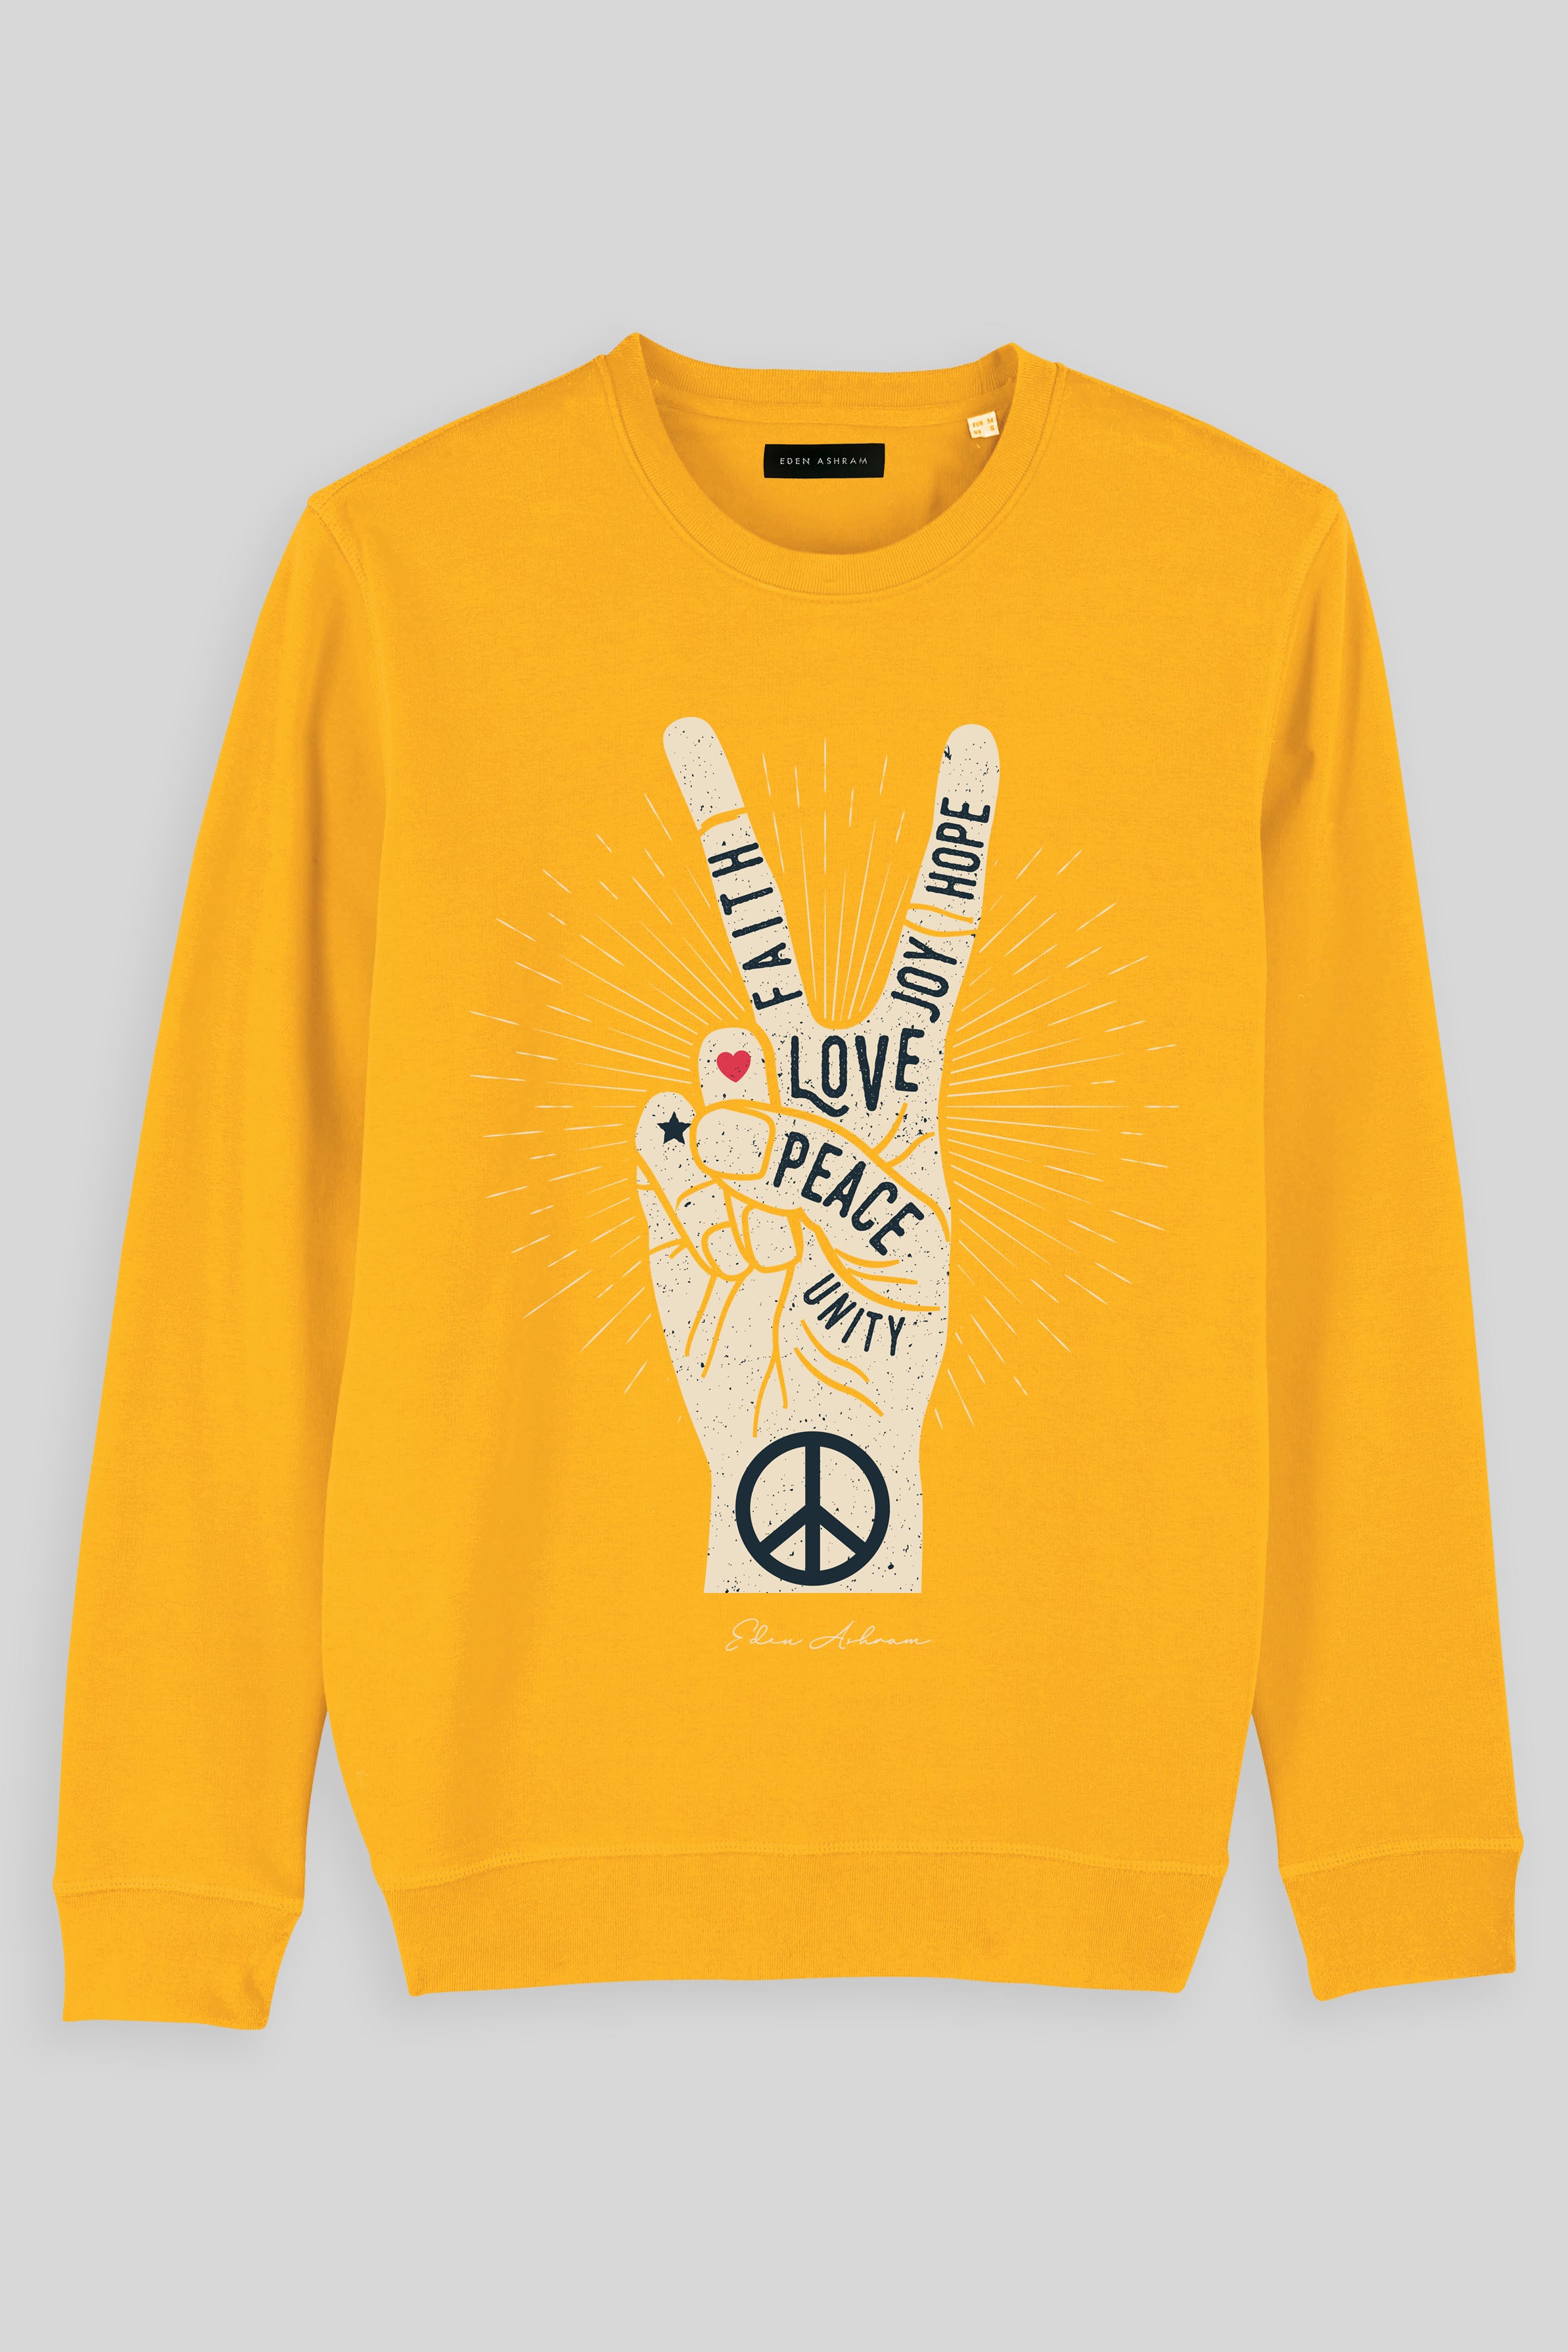 Eden Ashram Peace, Love, Unity, Faith, Joy & Hope Premium Crew Neck Sweatshirt Spectra Yellow